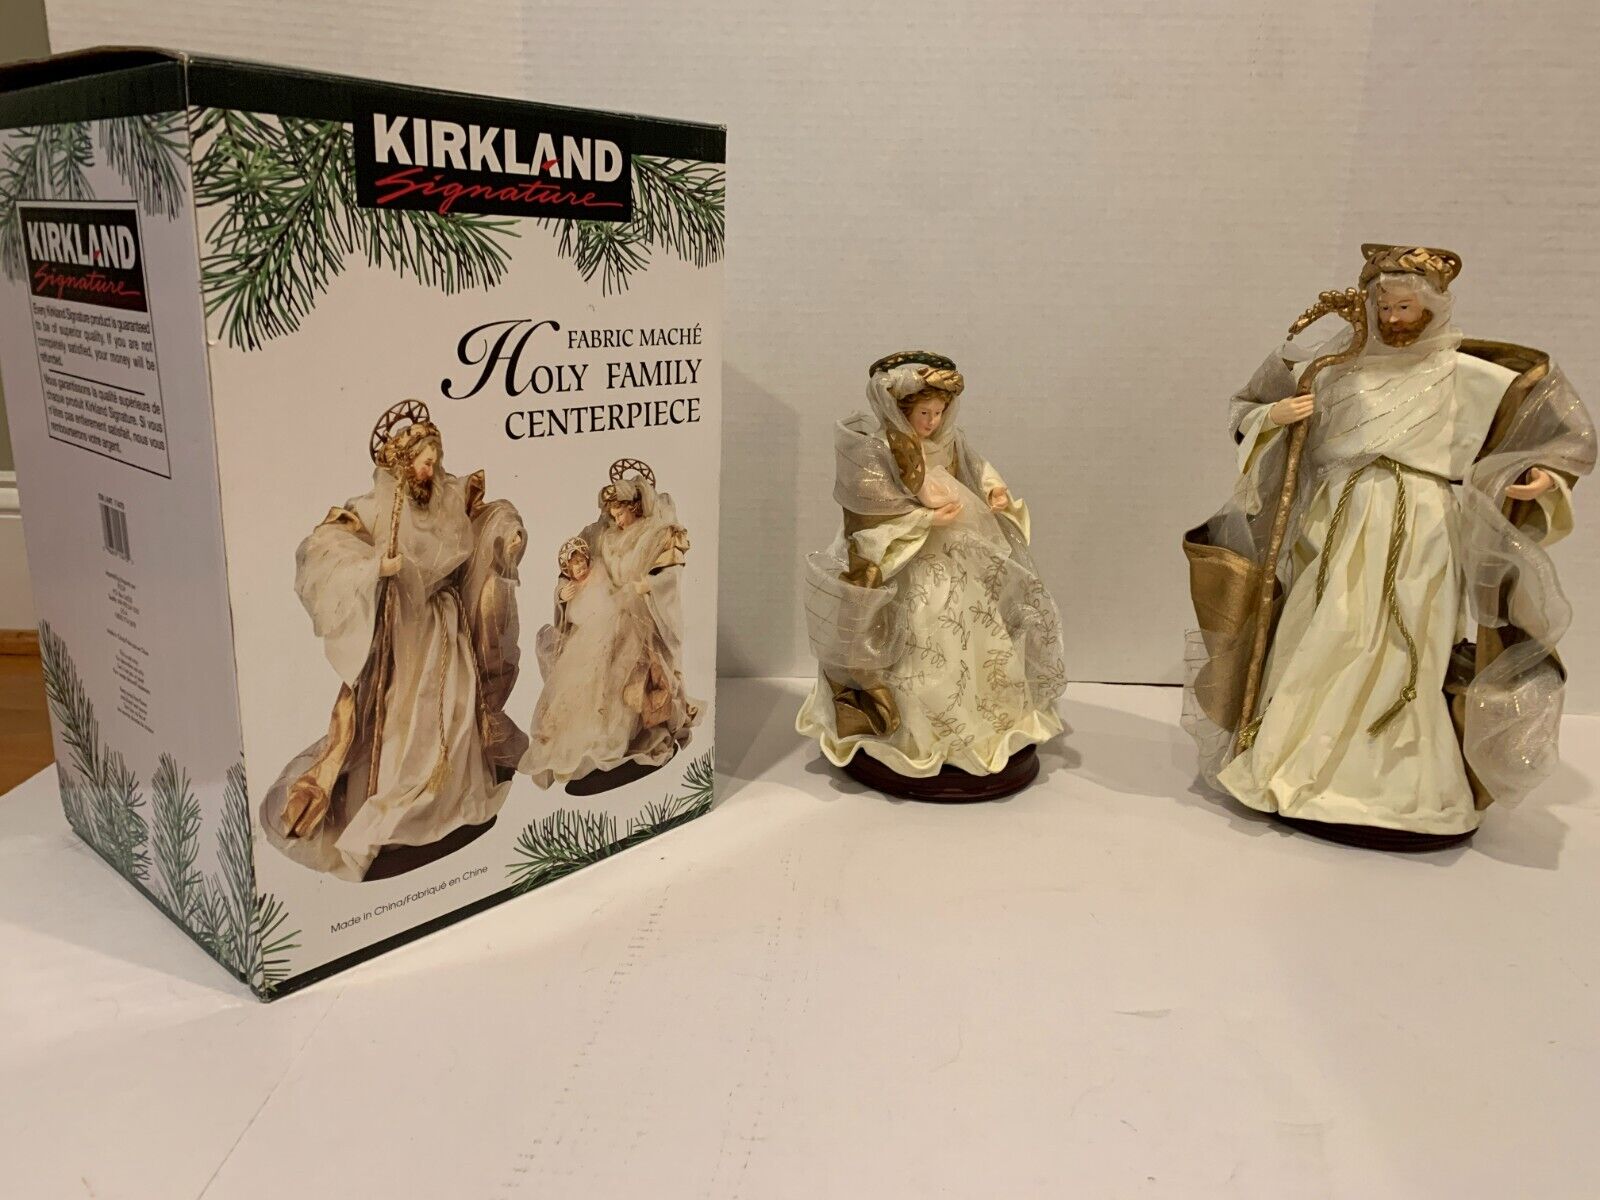 Kirkland Fabric Mache Holy Family Nativity Centerpiece